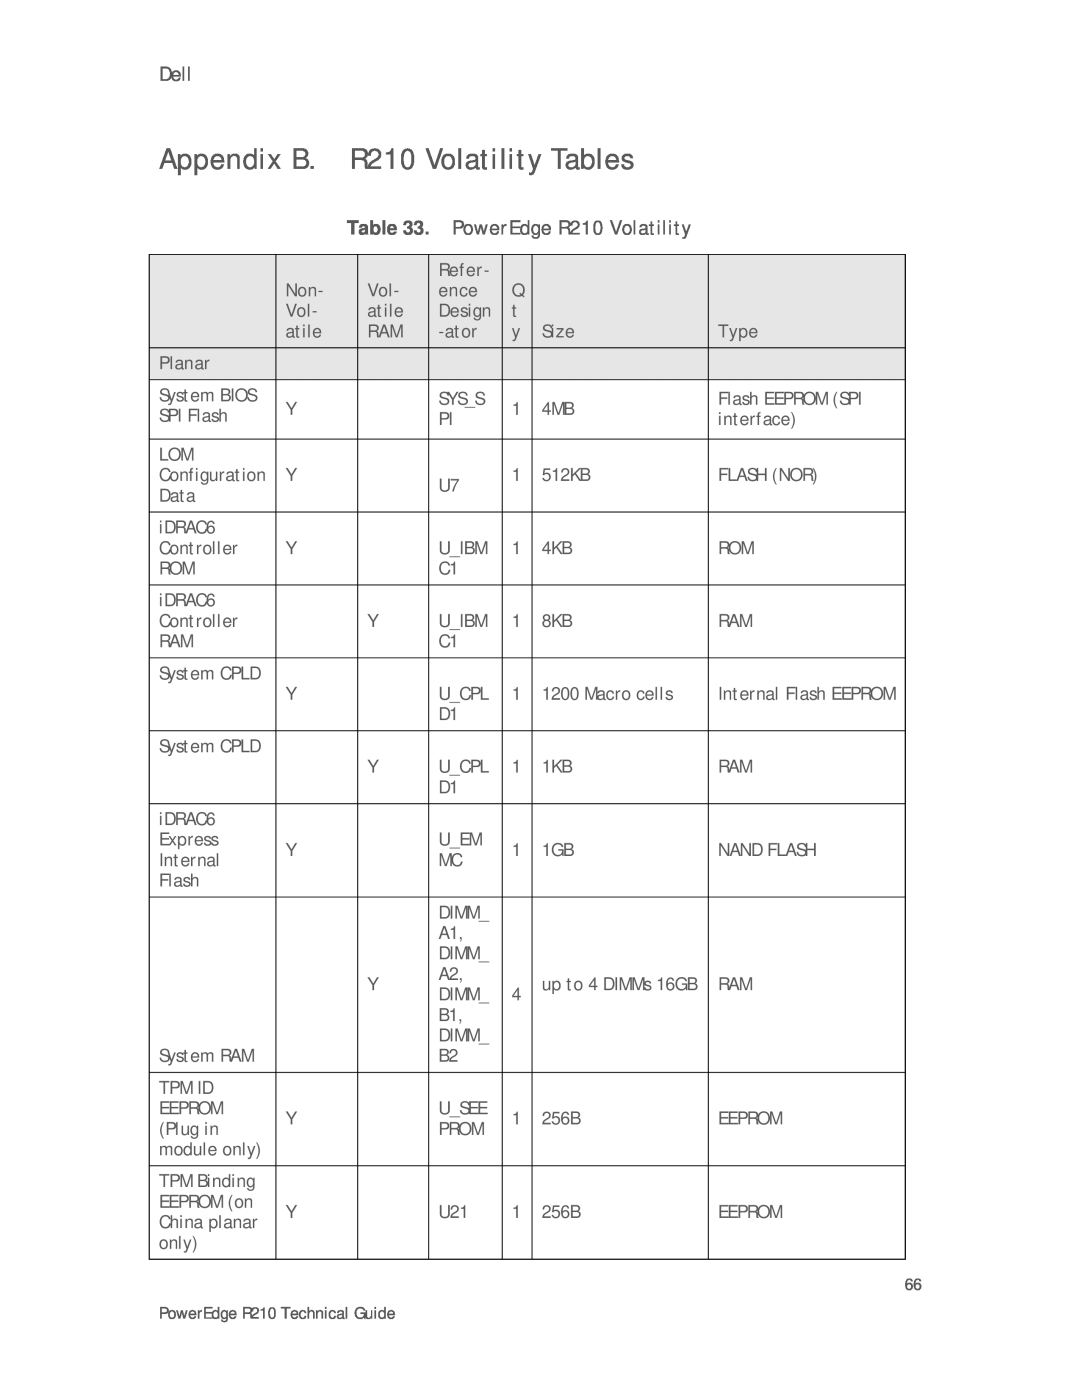 Dell manual Appendix B. R210 Volatility Tables, PowerEdge R210 Volatility 